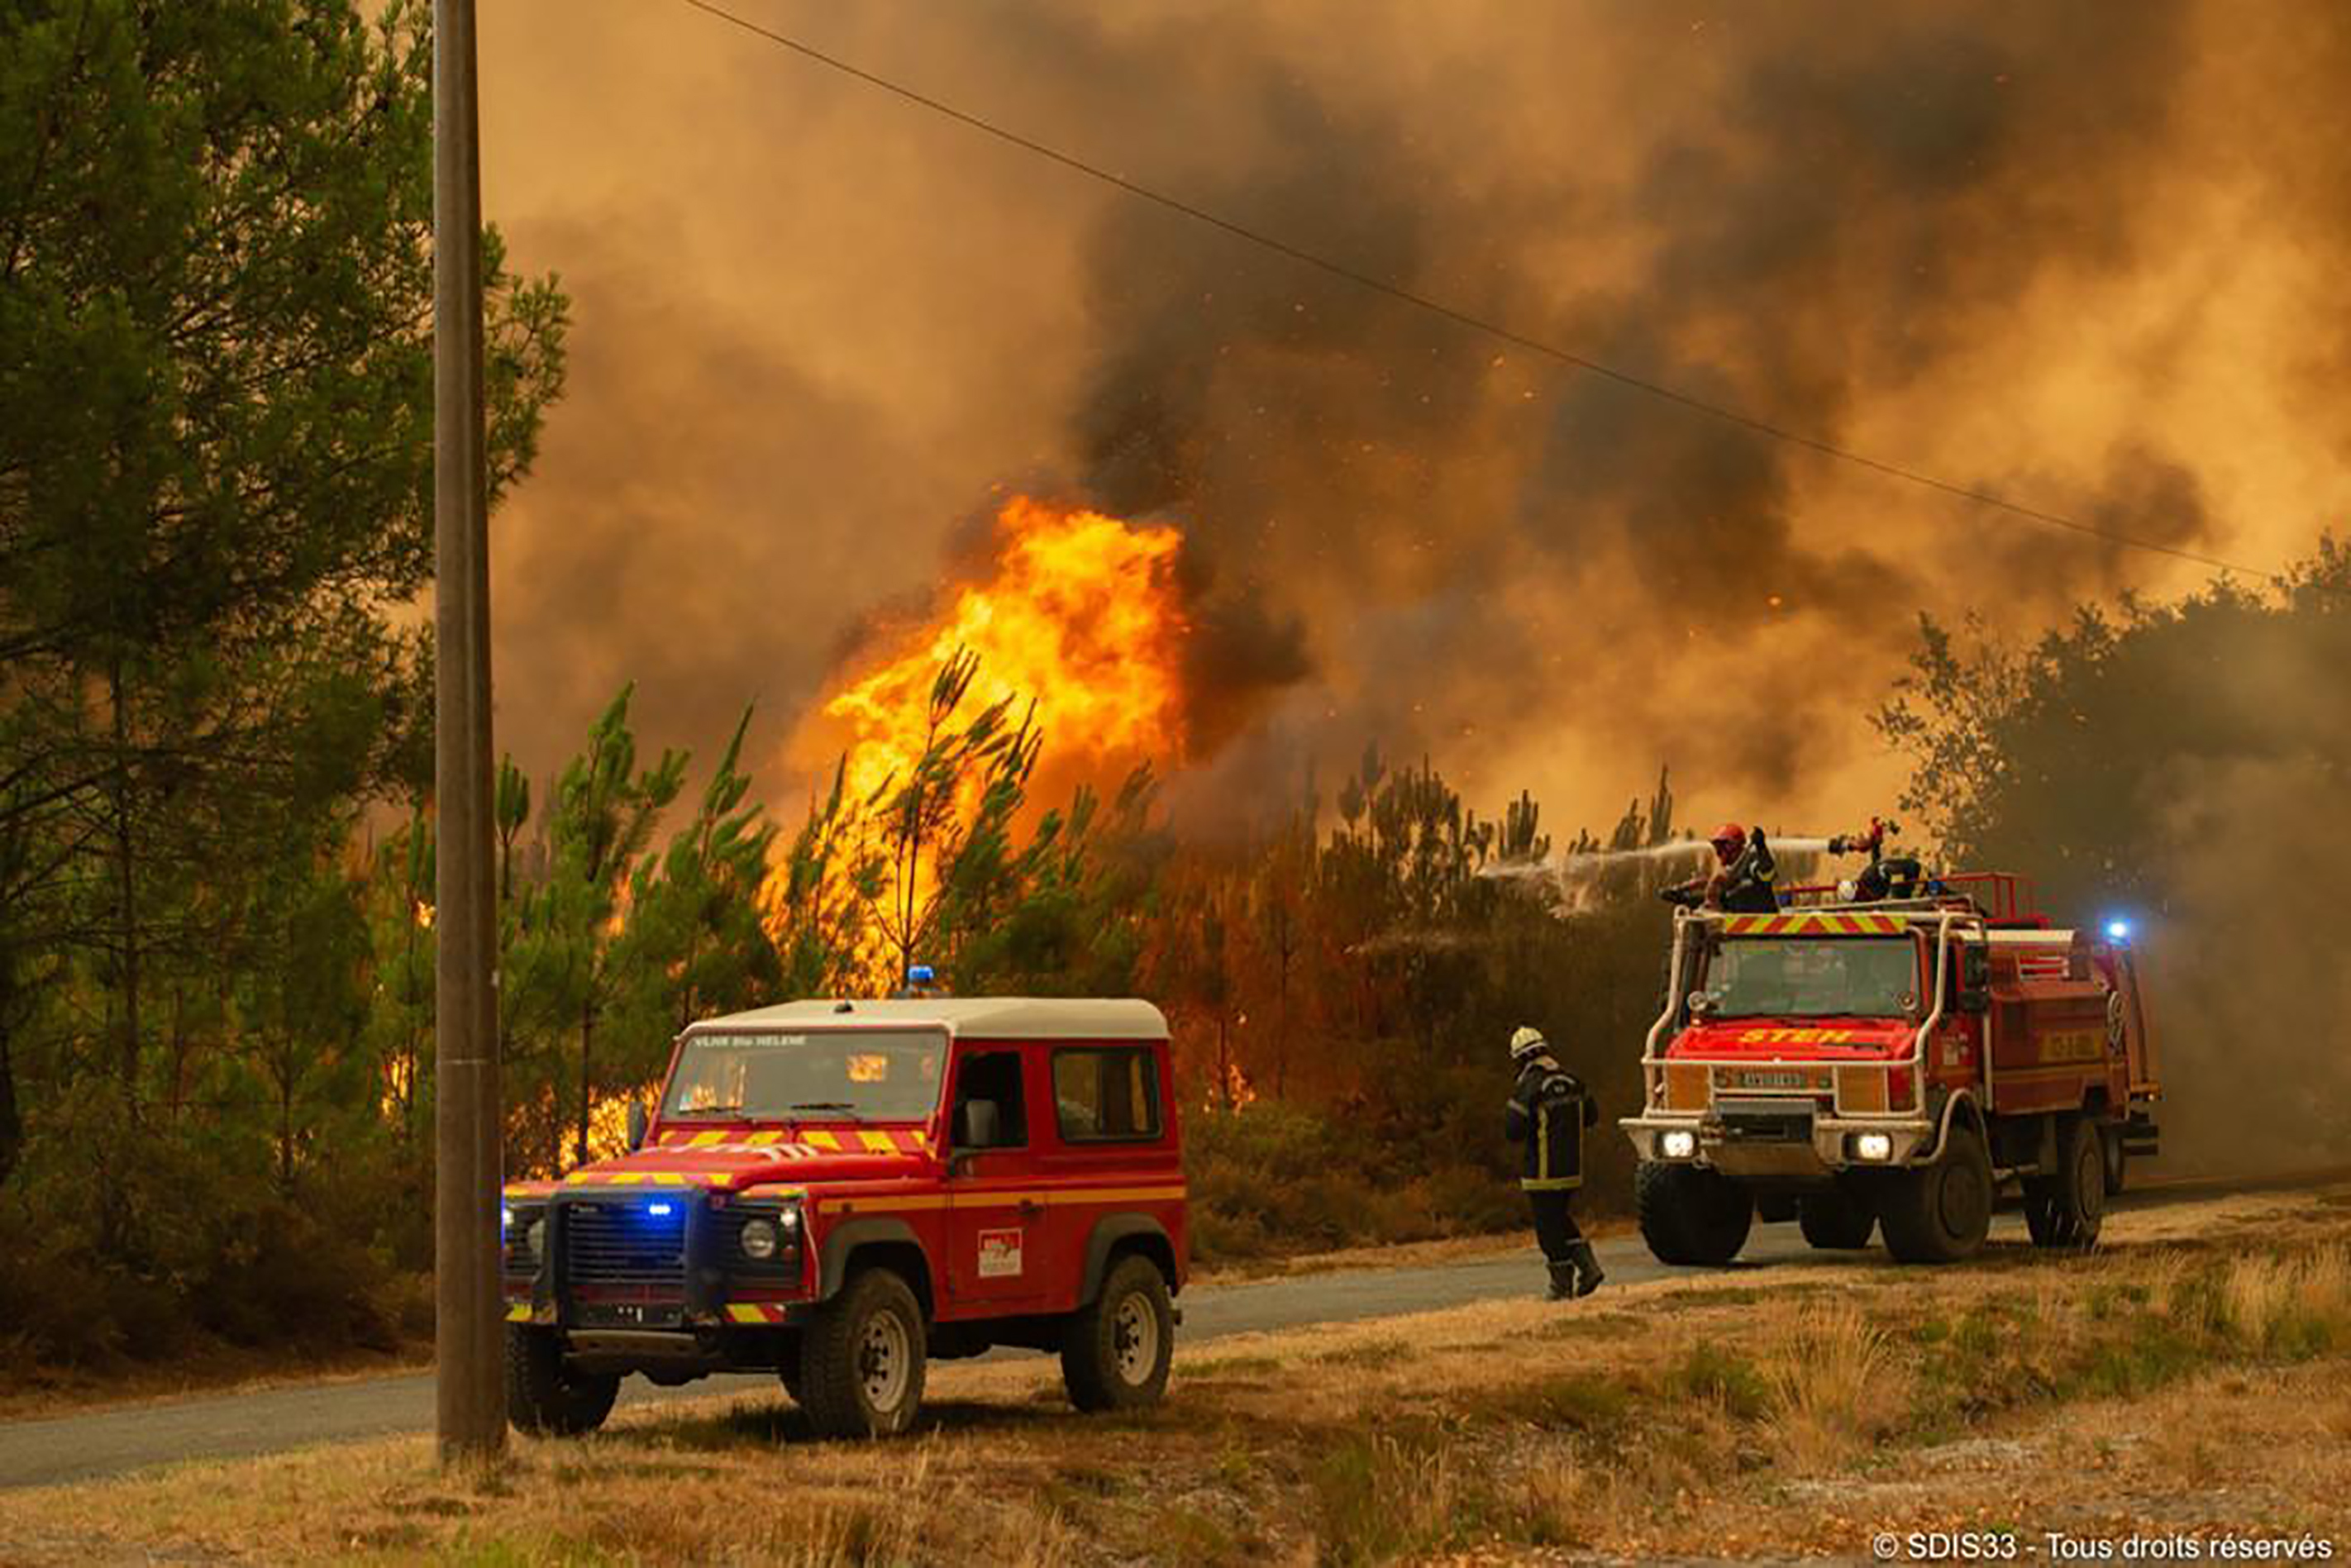 Firefighters tackling a blaze near Hostens, south of Bordeaux, southwestern France